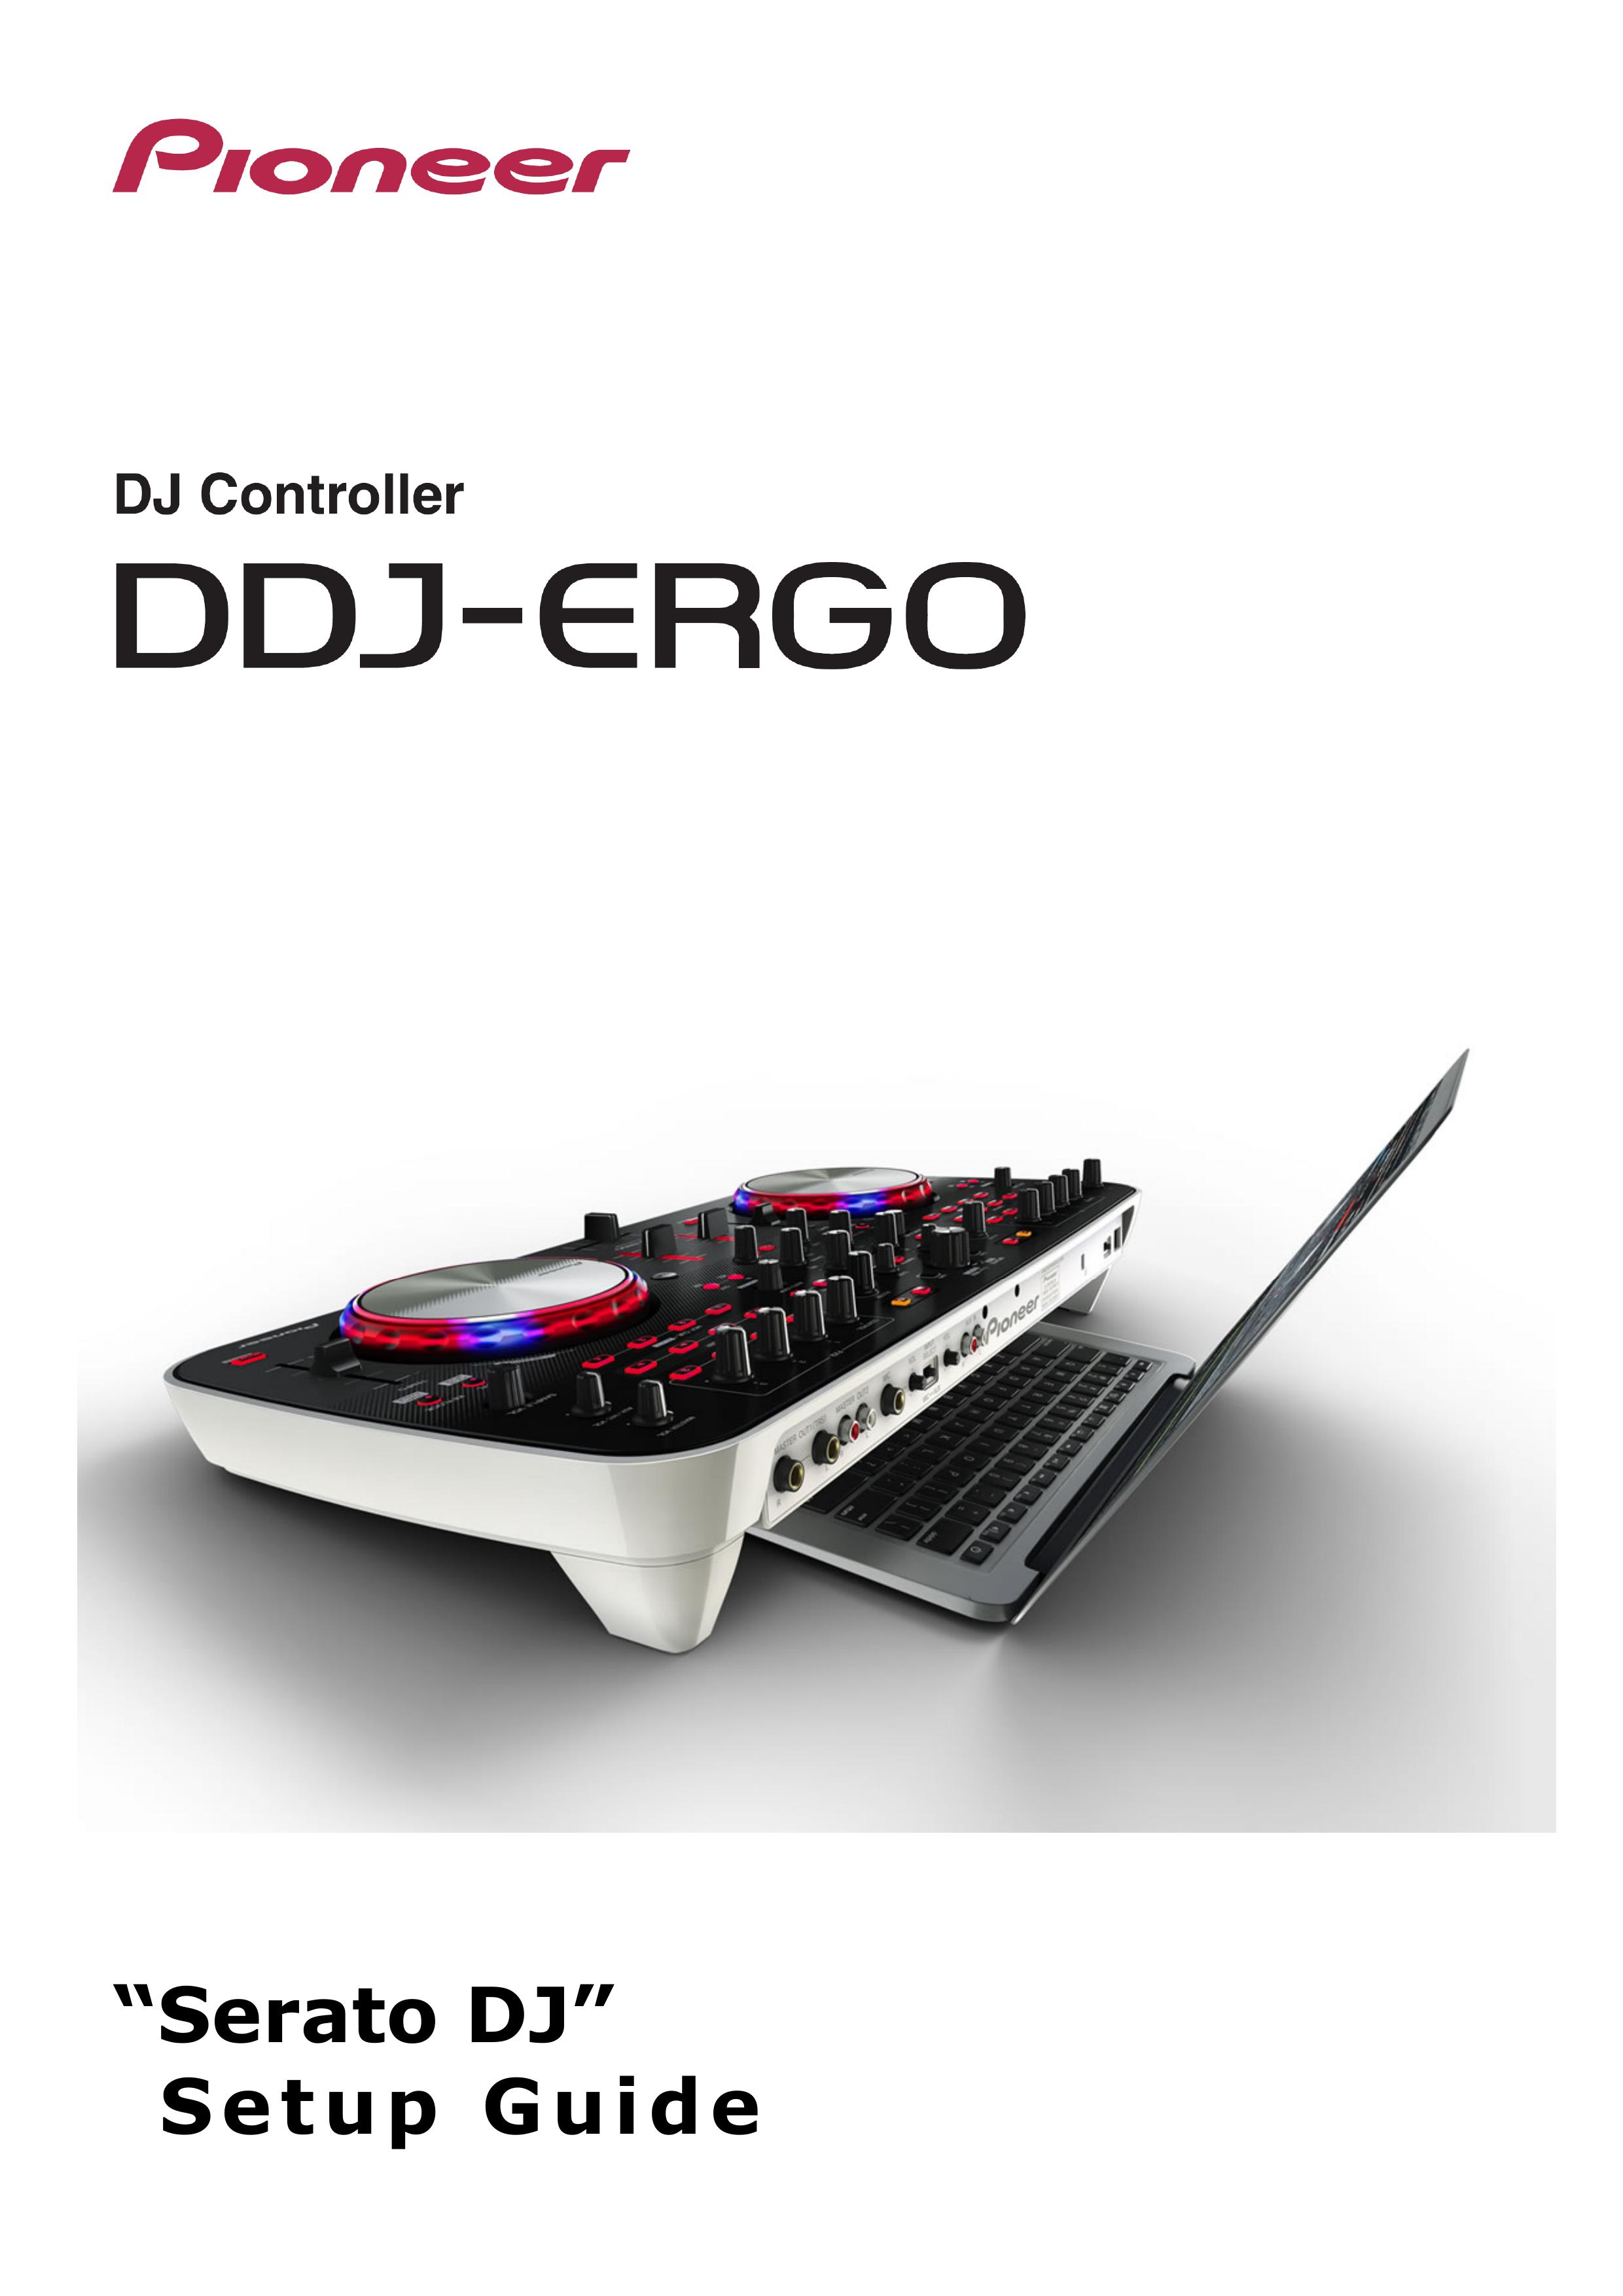 Pioneer DDJ-ERGO Music Mixer User Manual